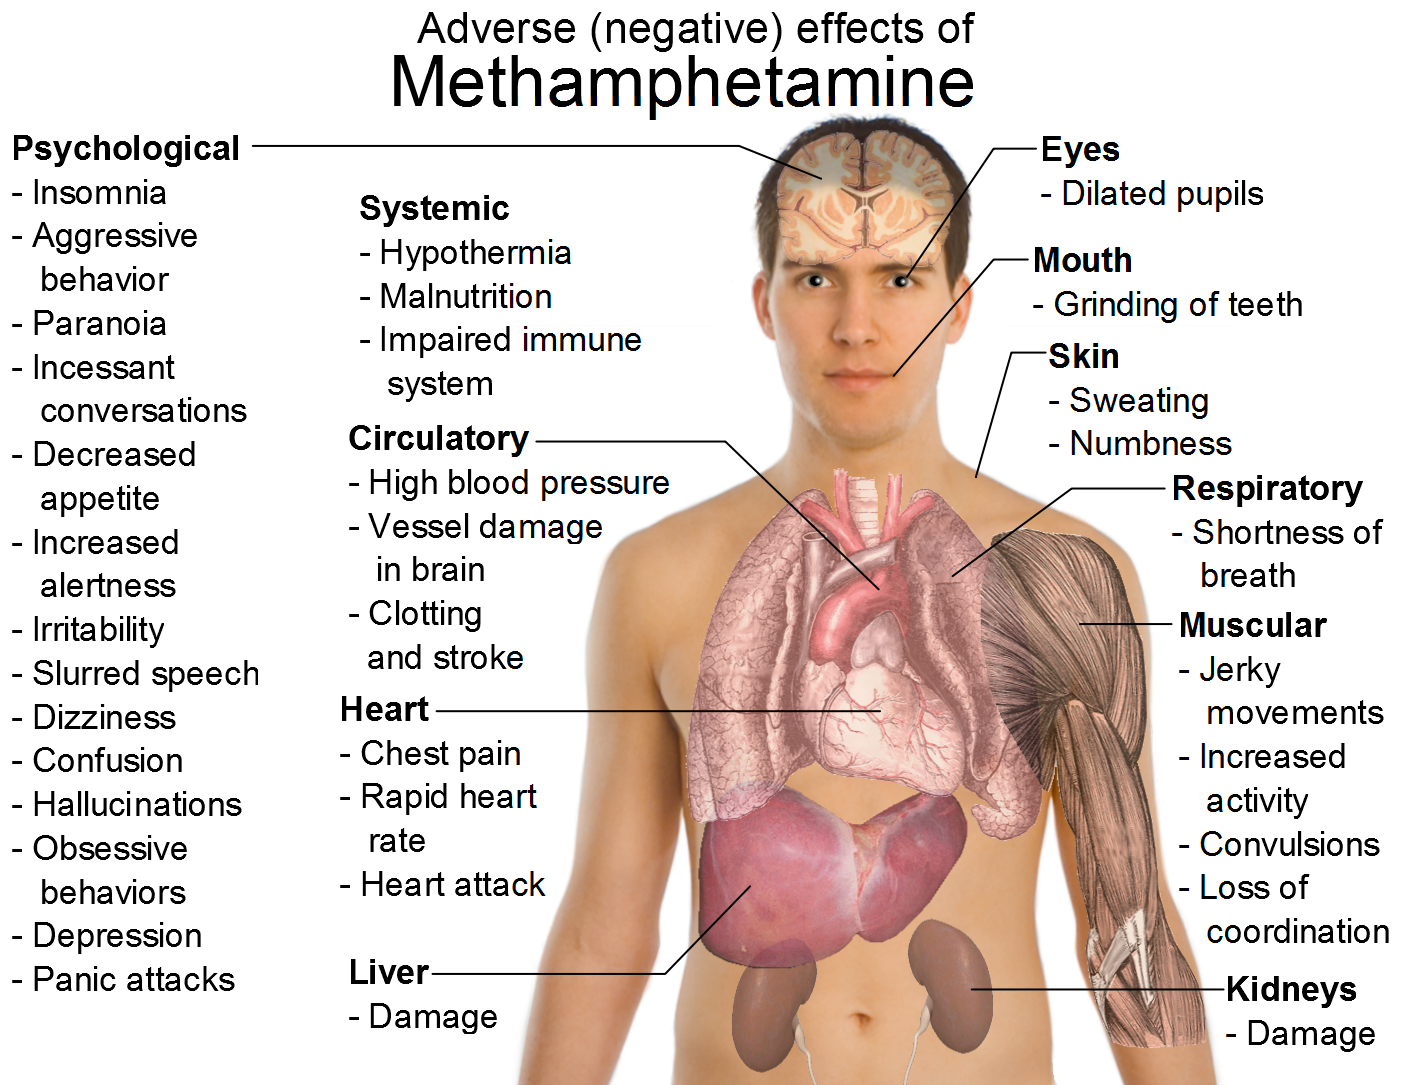 https://blogger.googleusercontent.com/img/b/R29vZ2xl/AVvXsEjoETuXYLMu61T1NZc5PHPmpZtAJgfsbX8rt8tUnuXwZswSOtnSUGXf2JYYpl8by8jcO1sP23ED7t7K01yow0ulz6zPp1gsmBE0dvK4i5VxPSAn373VPHVfrIfkE017arA1Piq2GdipxEY/s1600/Effects_of_metamphetamine.png